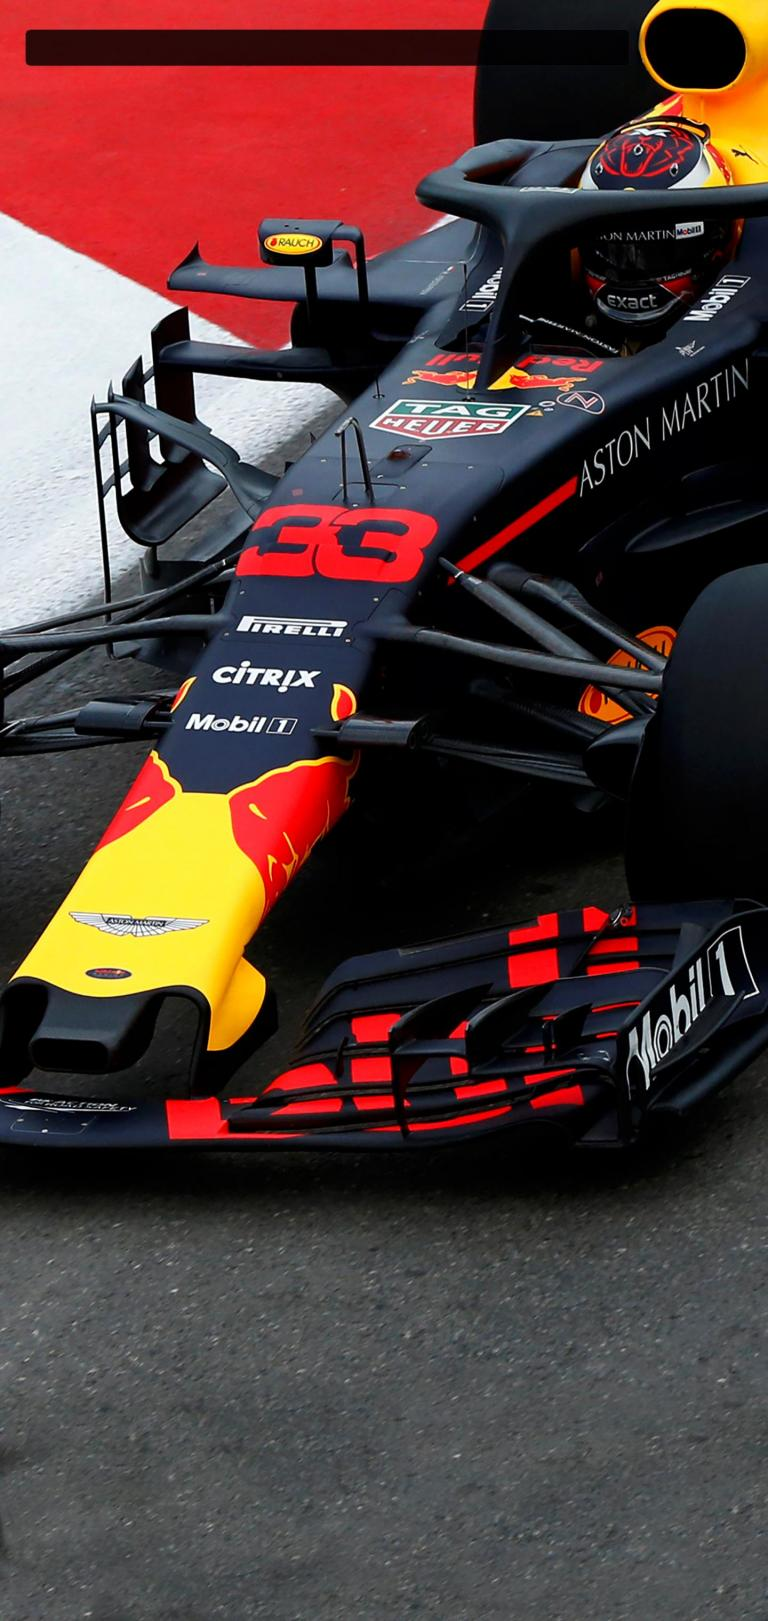 Red Bull F1 Racing by mbeats85. Galaxy .com